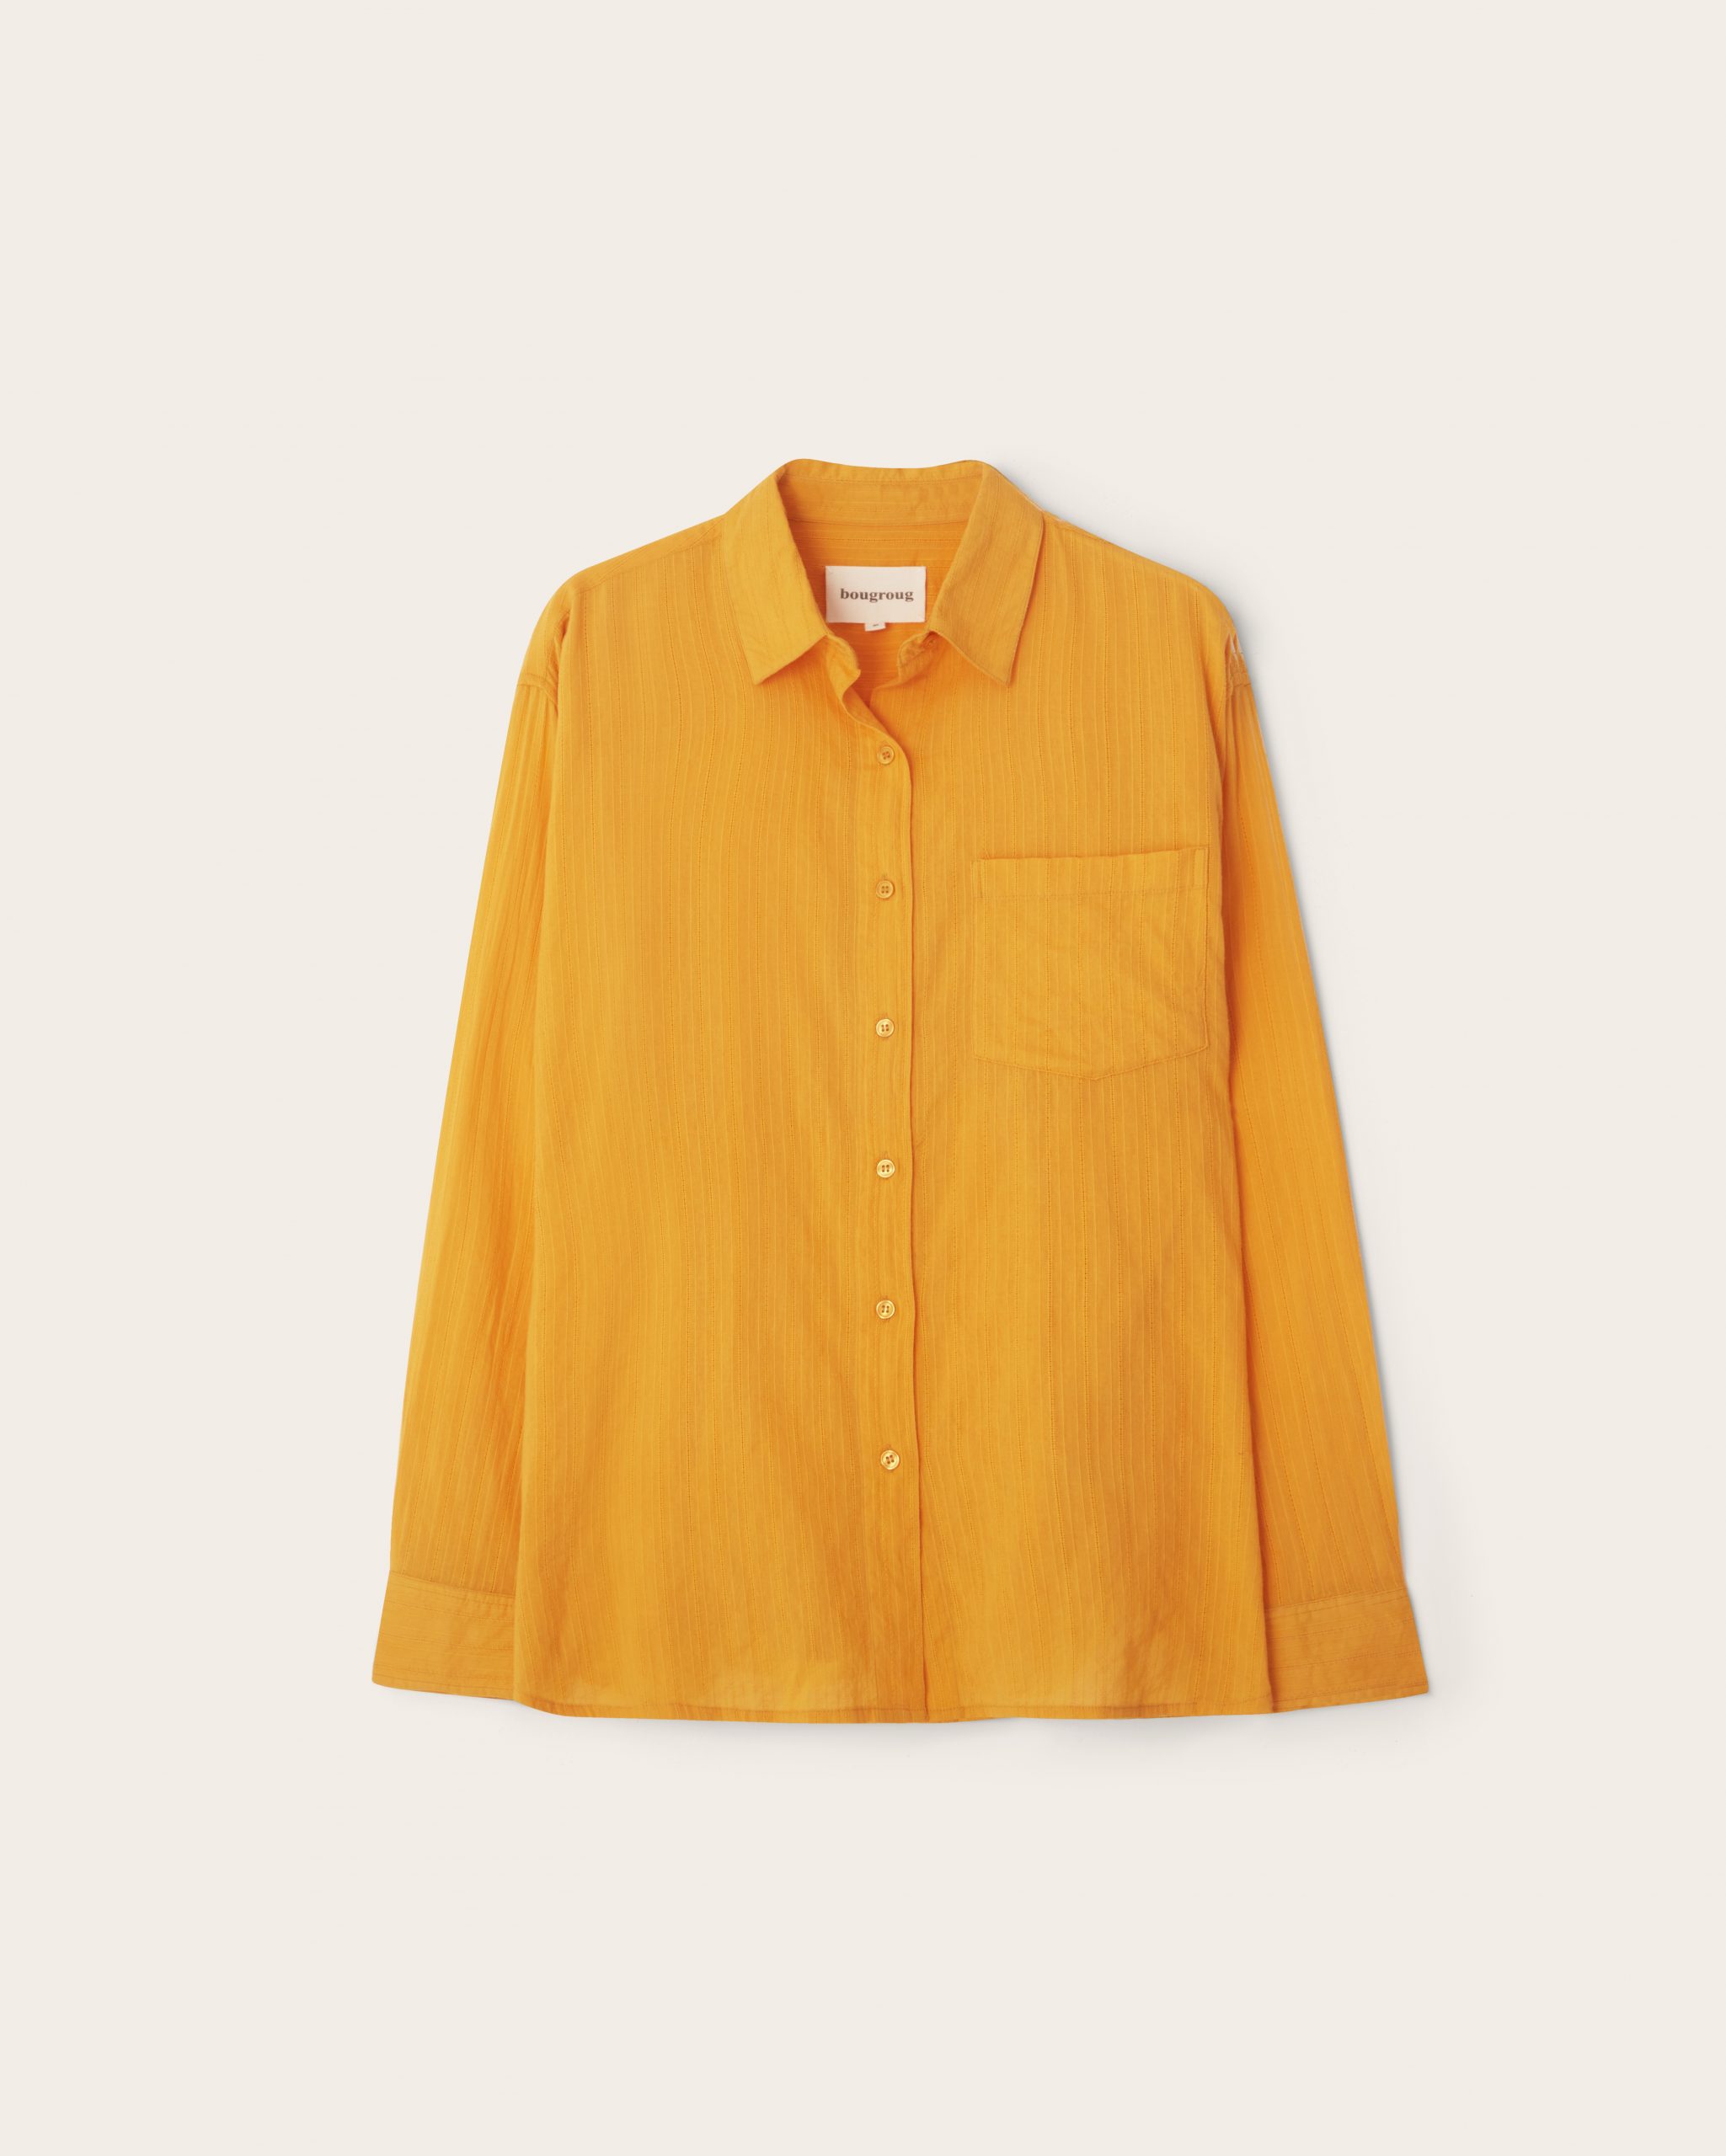 Orange long sleeve shirt in textured cotton dobby fabric handmade in Morocco and India. Genderless bougroug style. Designed by Anwar Bougroug